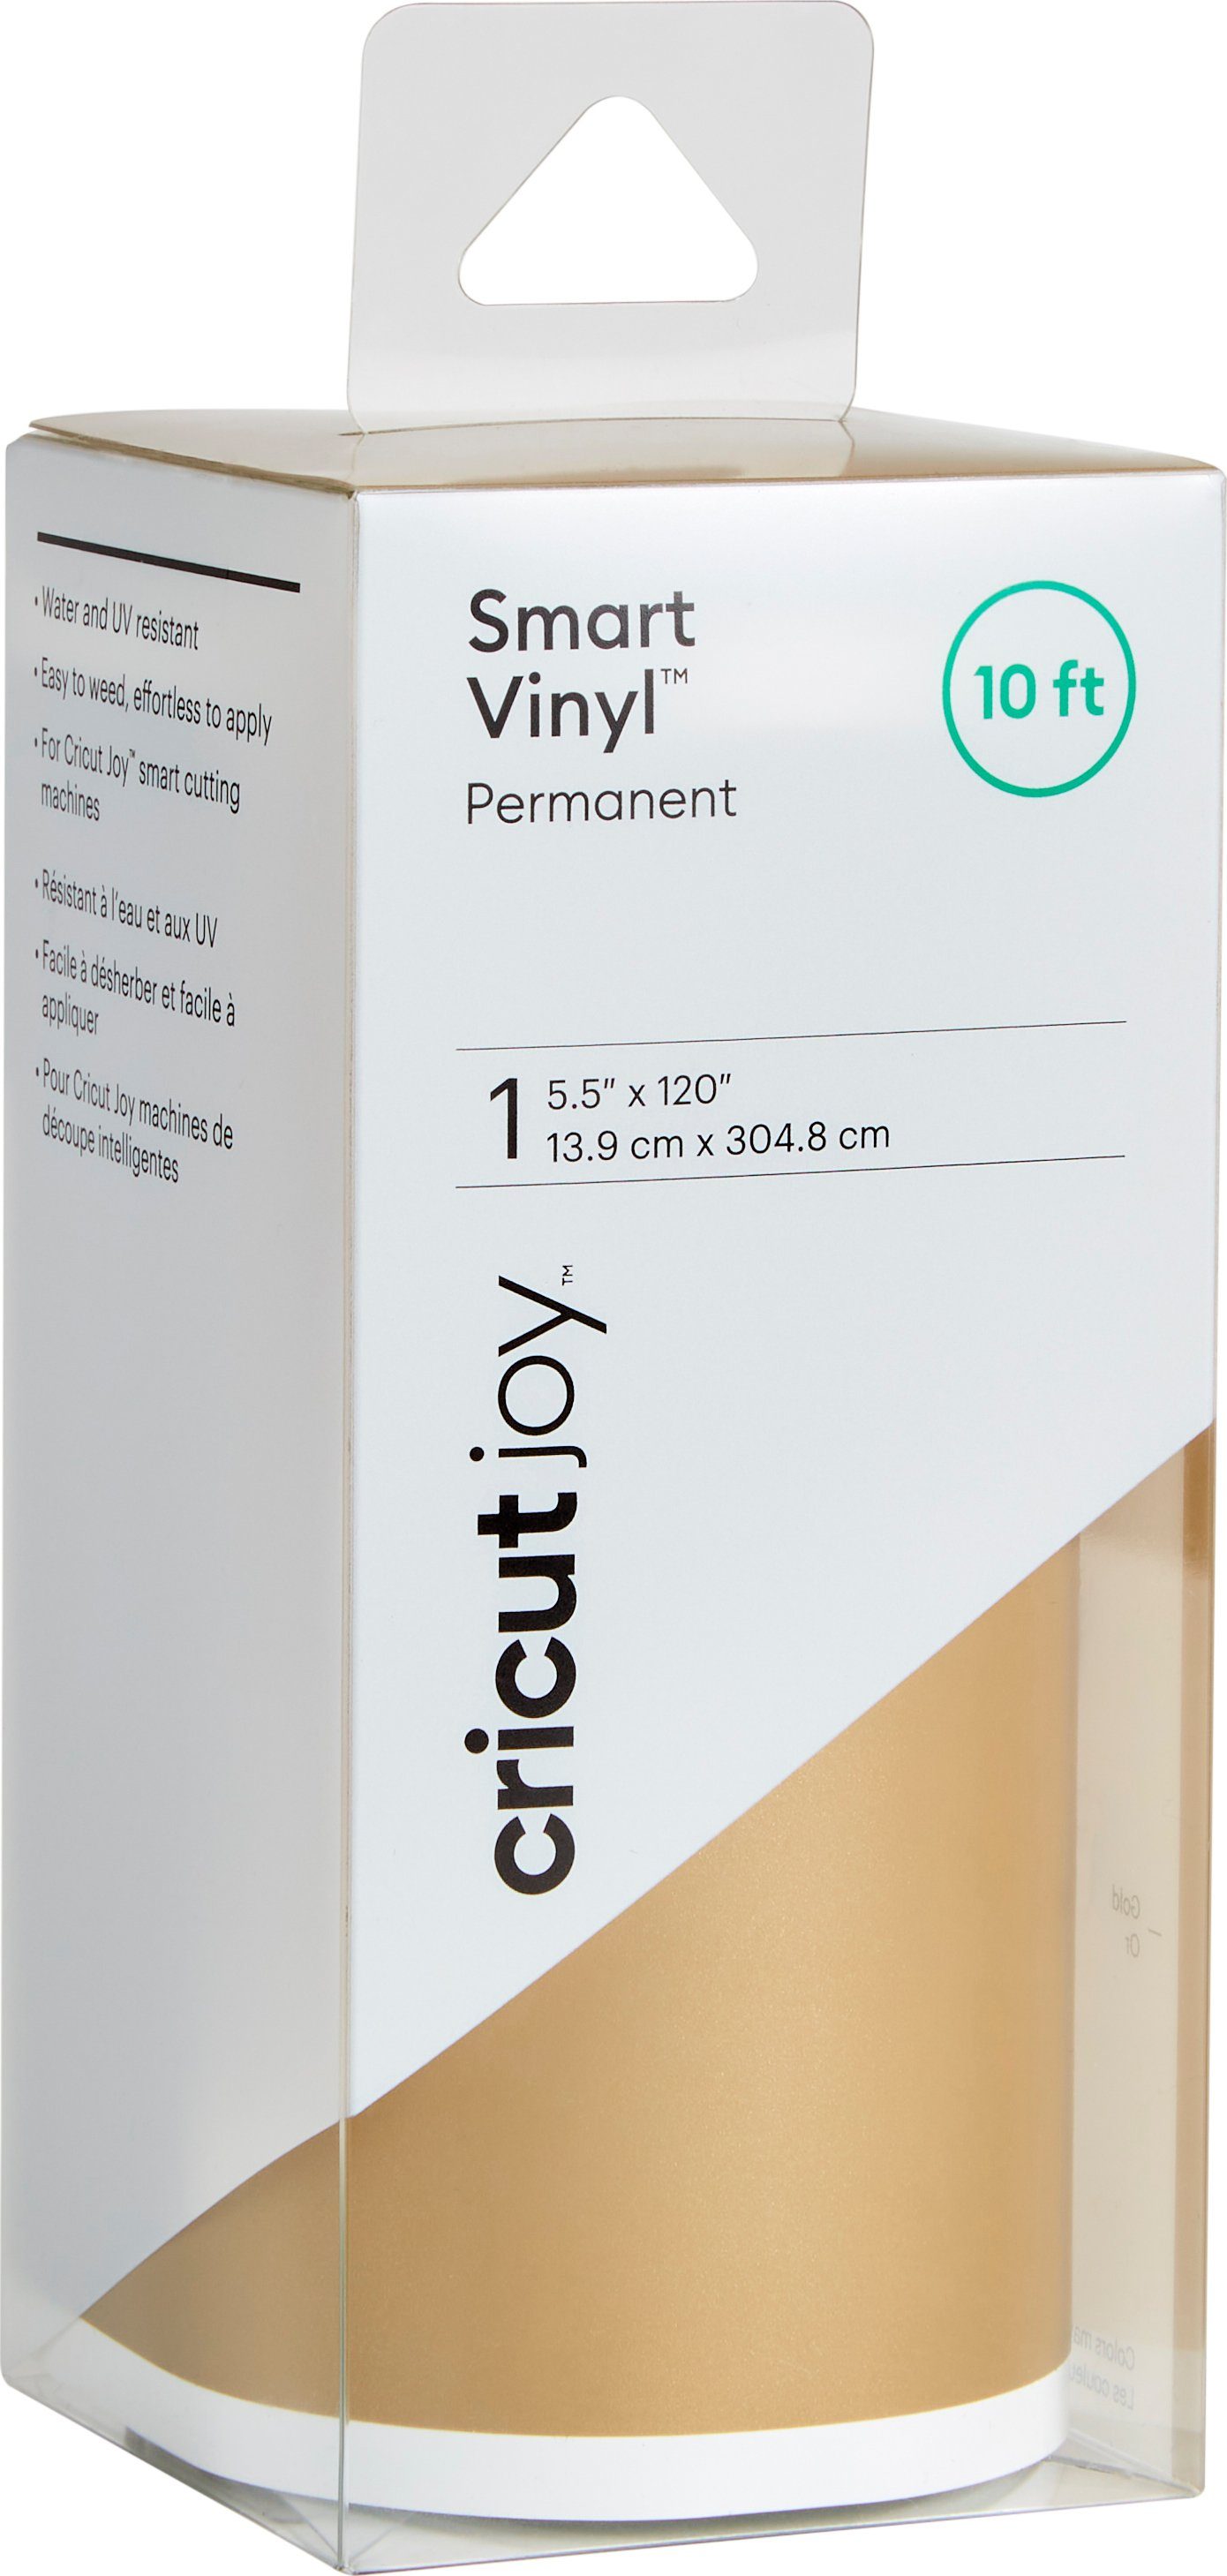 Cricut Dekorationsfolie Joy Selbstklebend Vinylfolie - Glänzend, Smart  Vinyl - Permanent, 13,9 cm x 304,8 cm